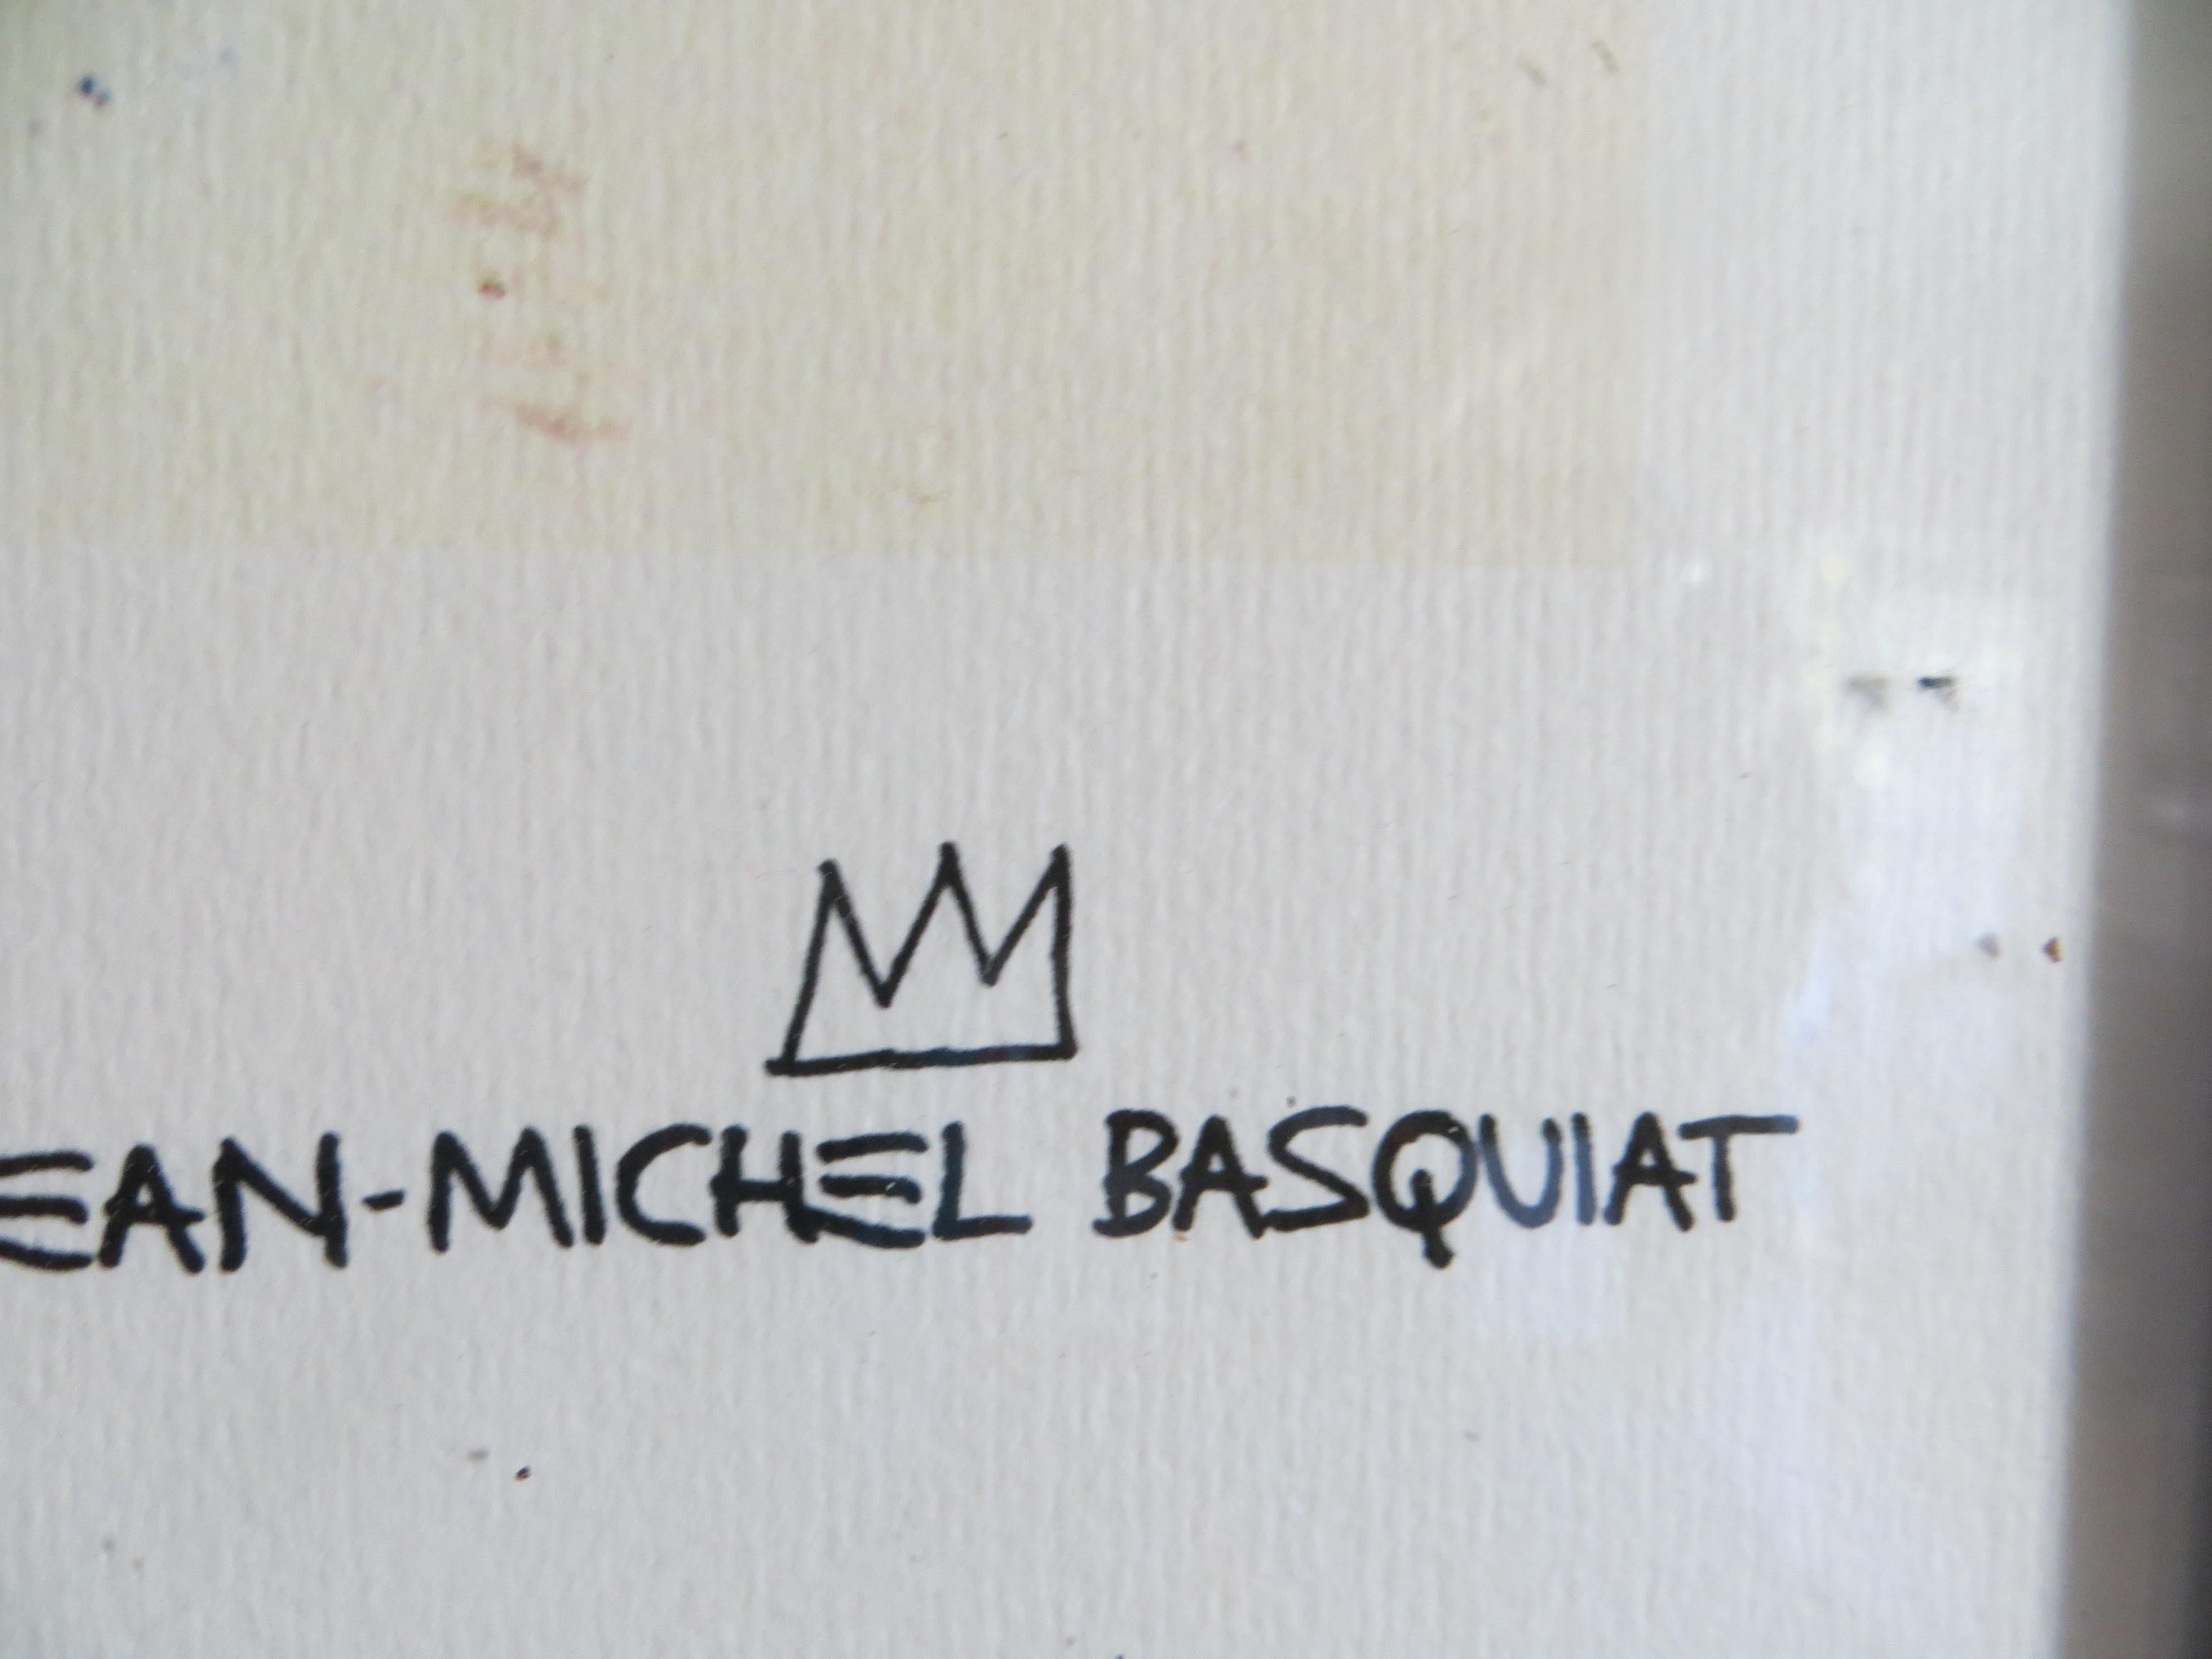 The Estate of Jean-Michel Basquiat,  Lithograph, 57 / 300 Ltd  - Street Art Print by (after) Jean-Michel Basquiat